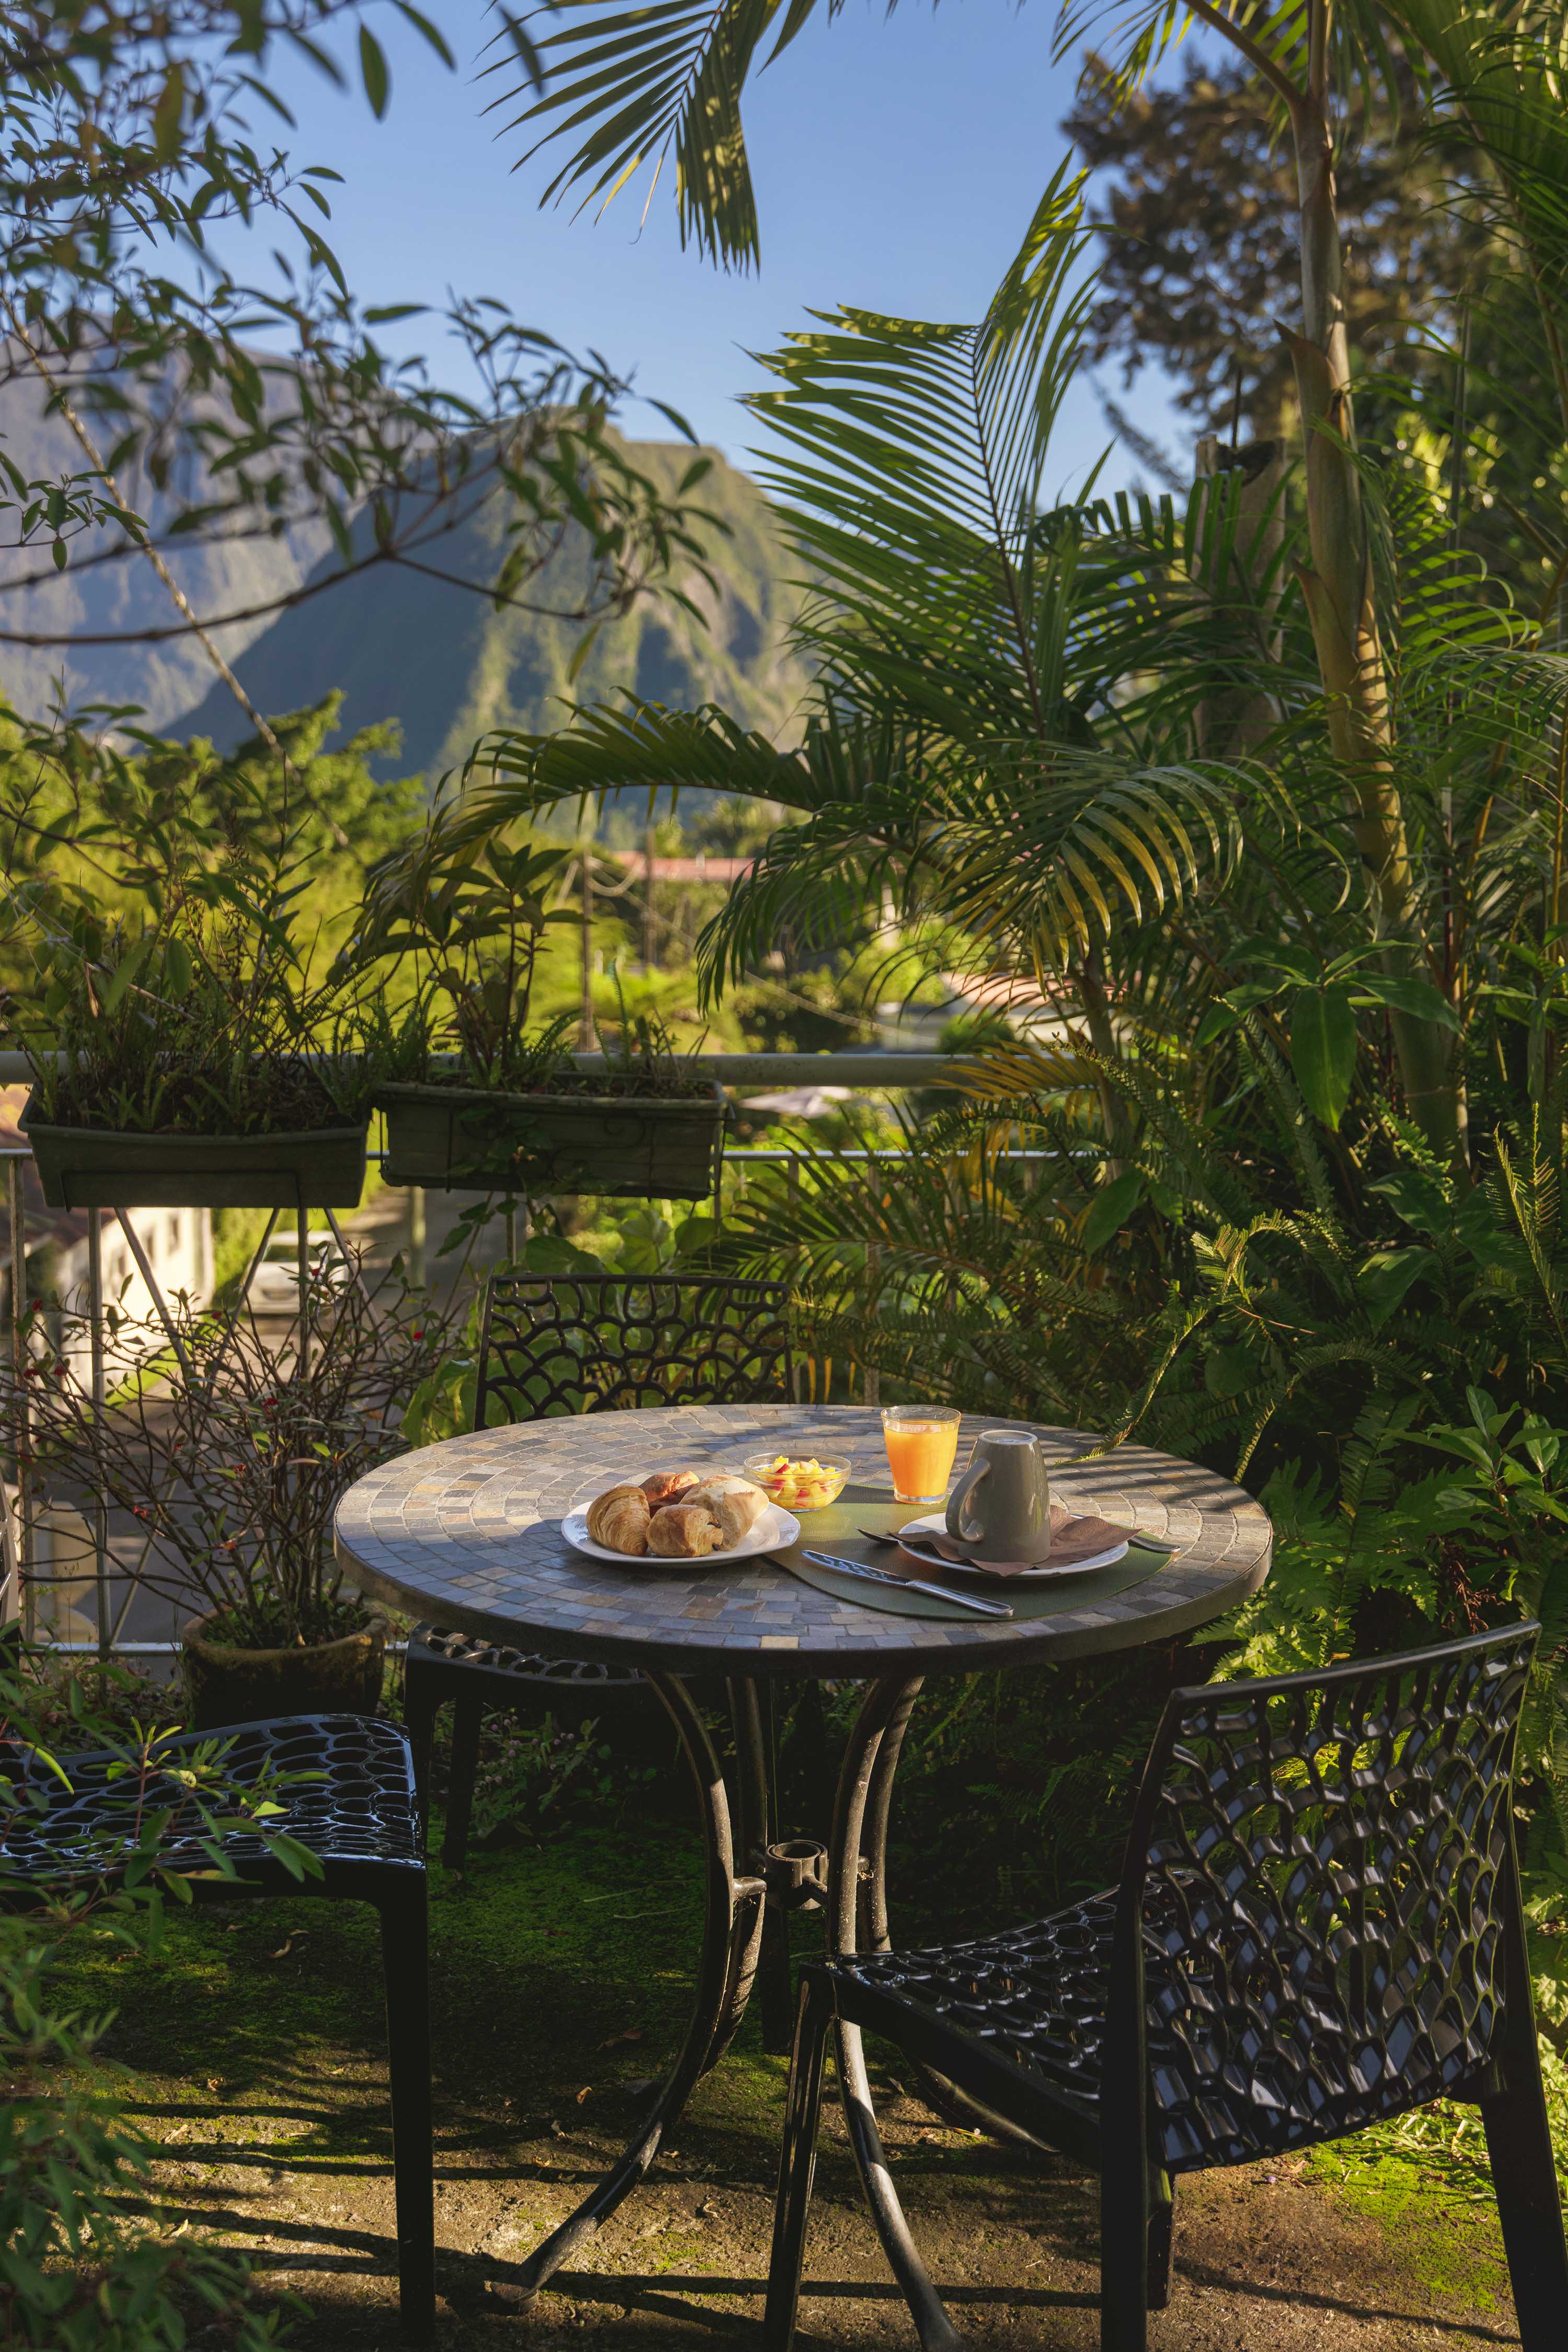 Breakfast in the garden, view on the montain | Source : Hotel Le Relais des Cîmes - www.relaisdescimes.com